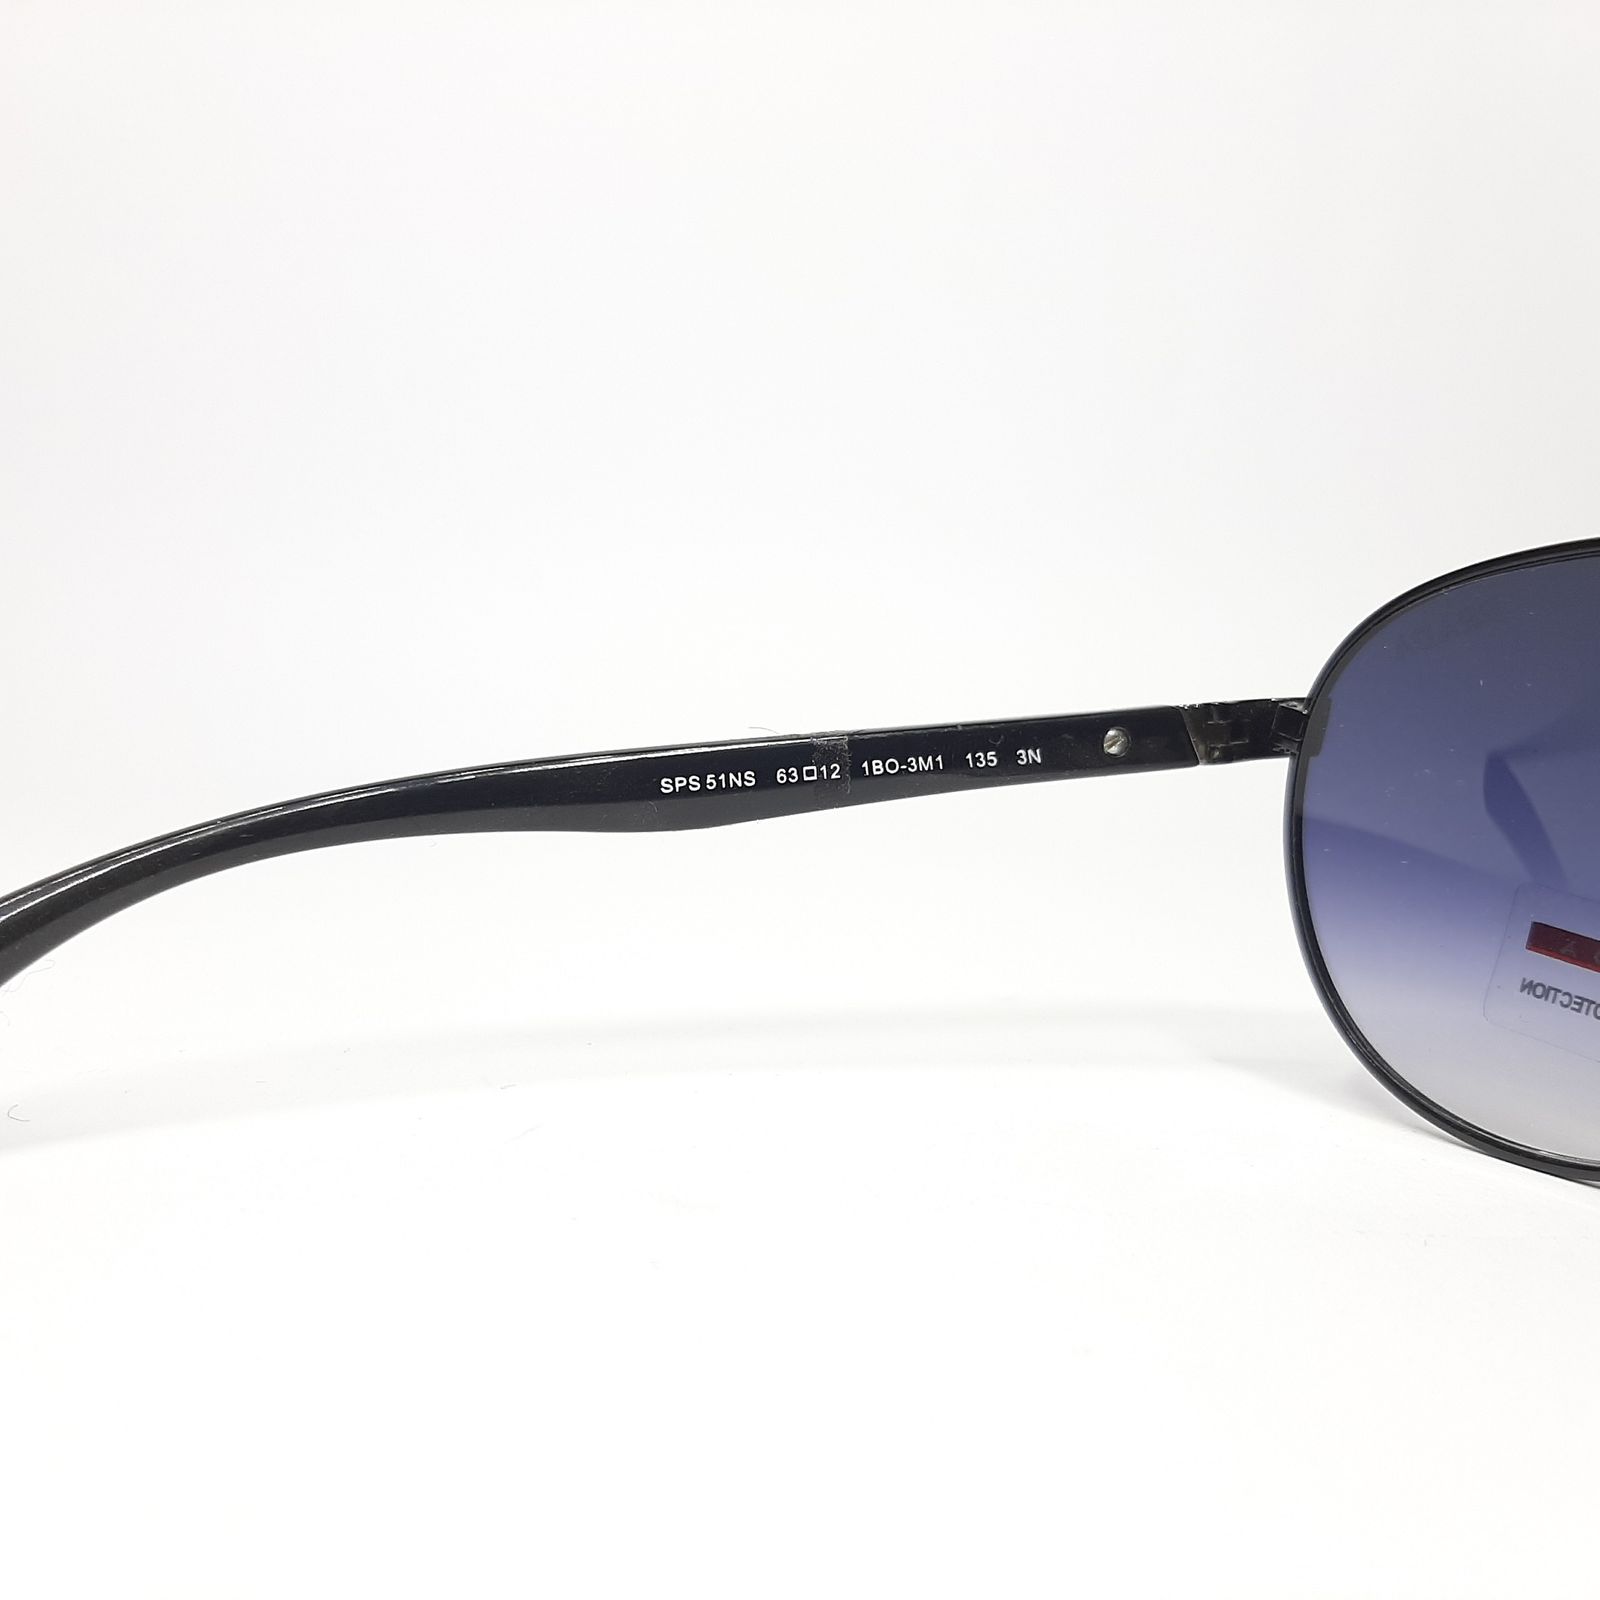 عینک آفتابی پرادا مدل SPS51ns -  - 7